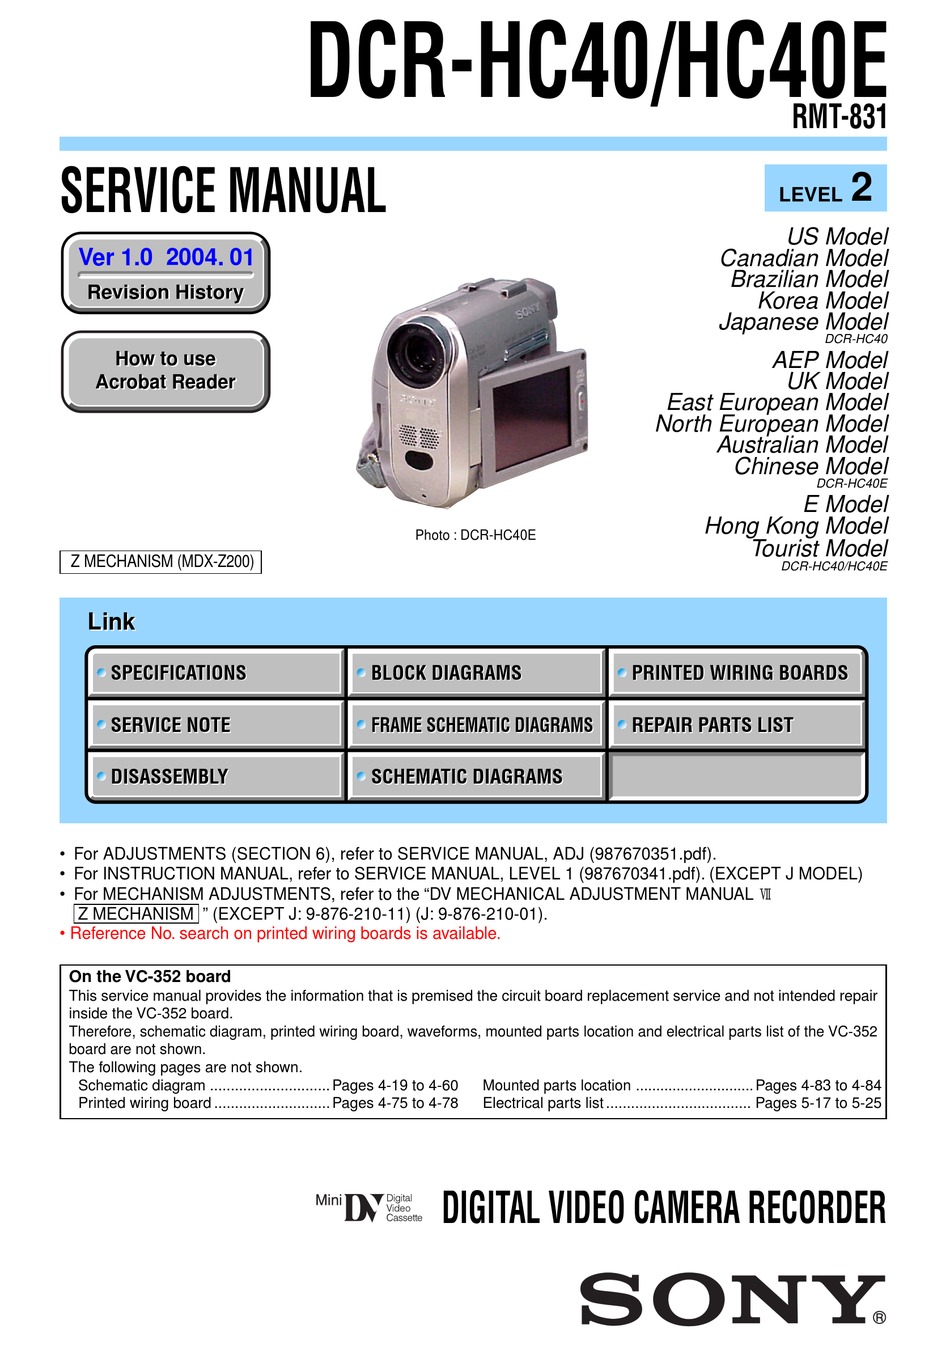 SONY DCR-HC40 SERVICE MANUAL Pdf Download | ManualsLib